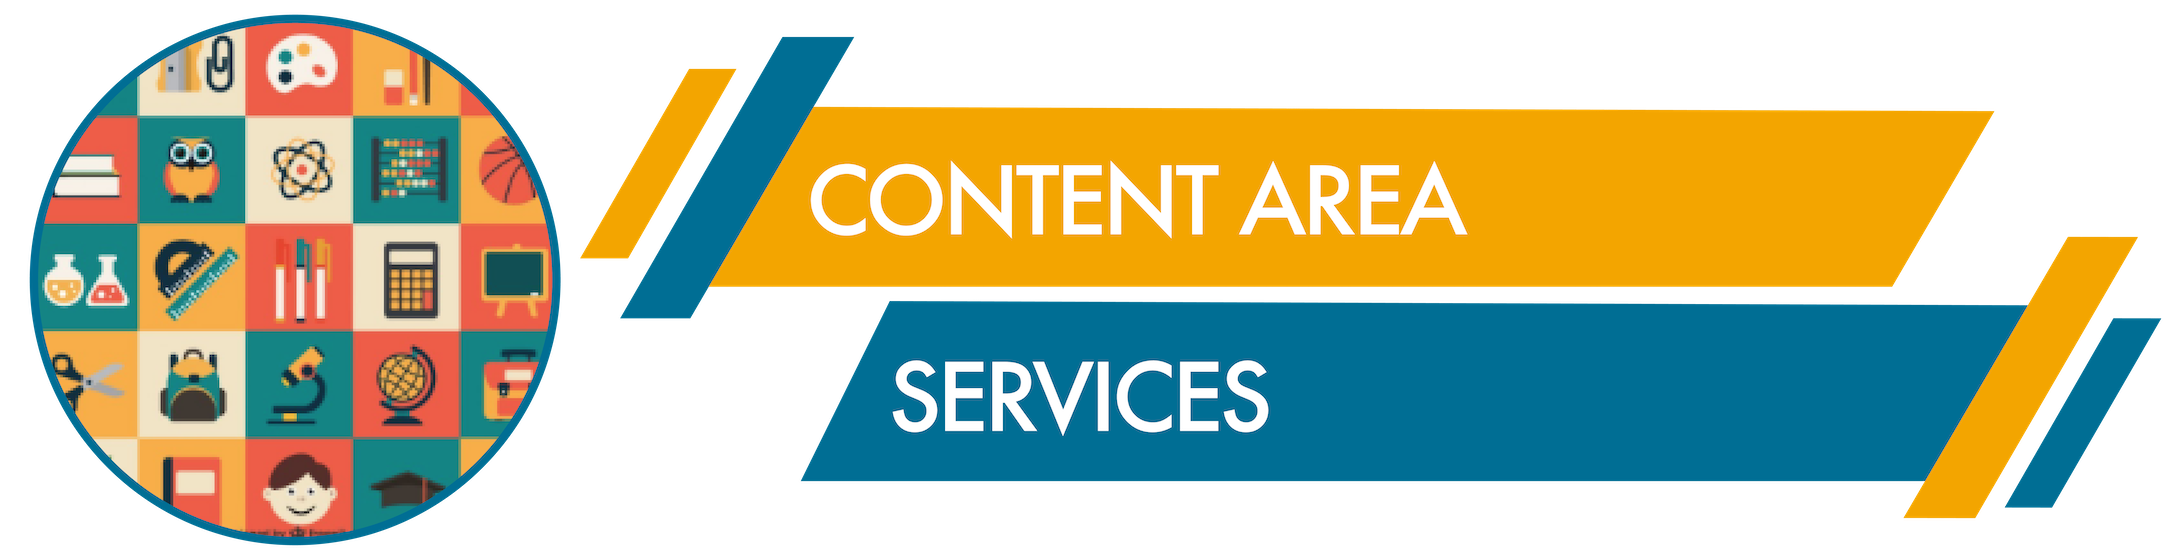 Content Area Services Banner